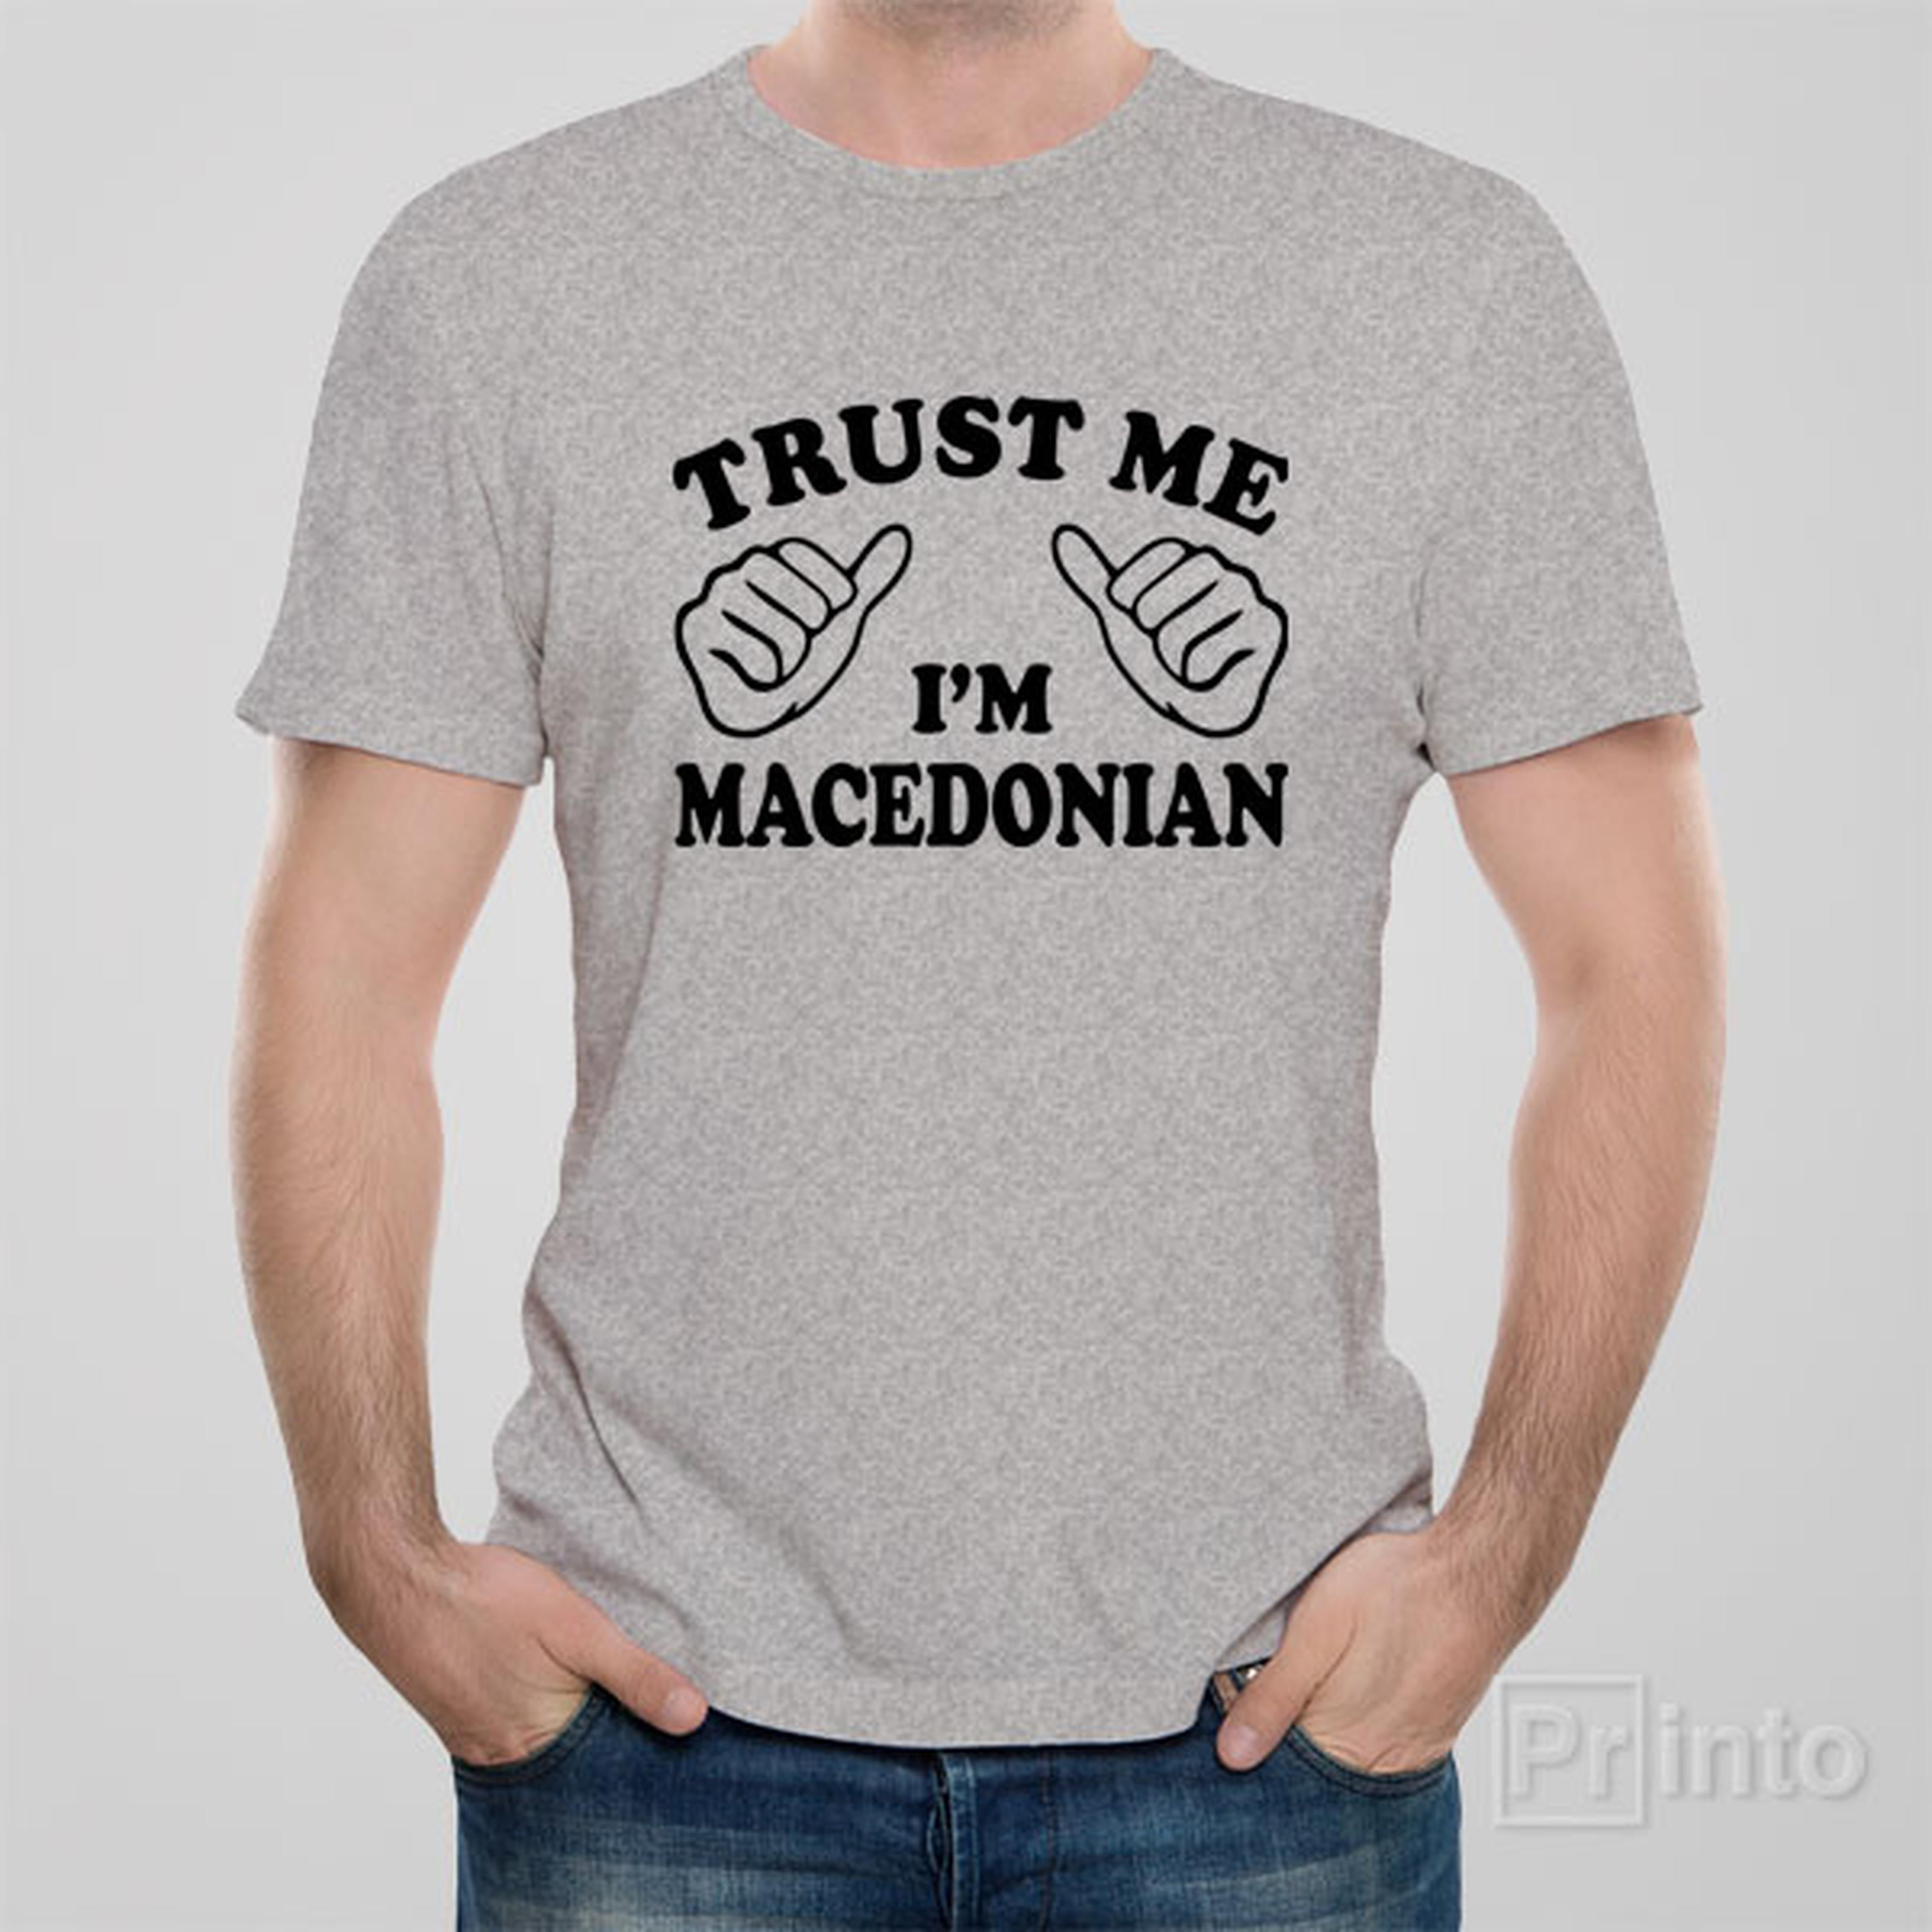 trust-me-i-am-macedonian-t-shirt